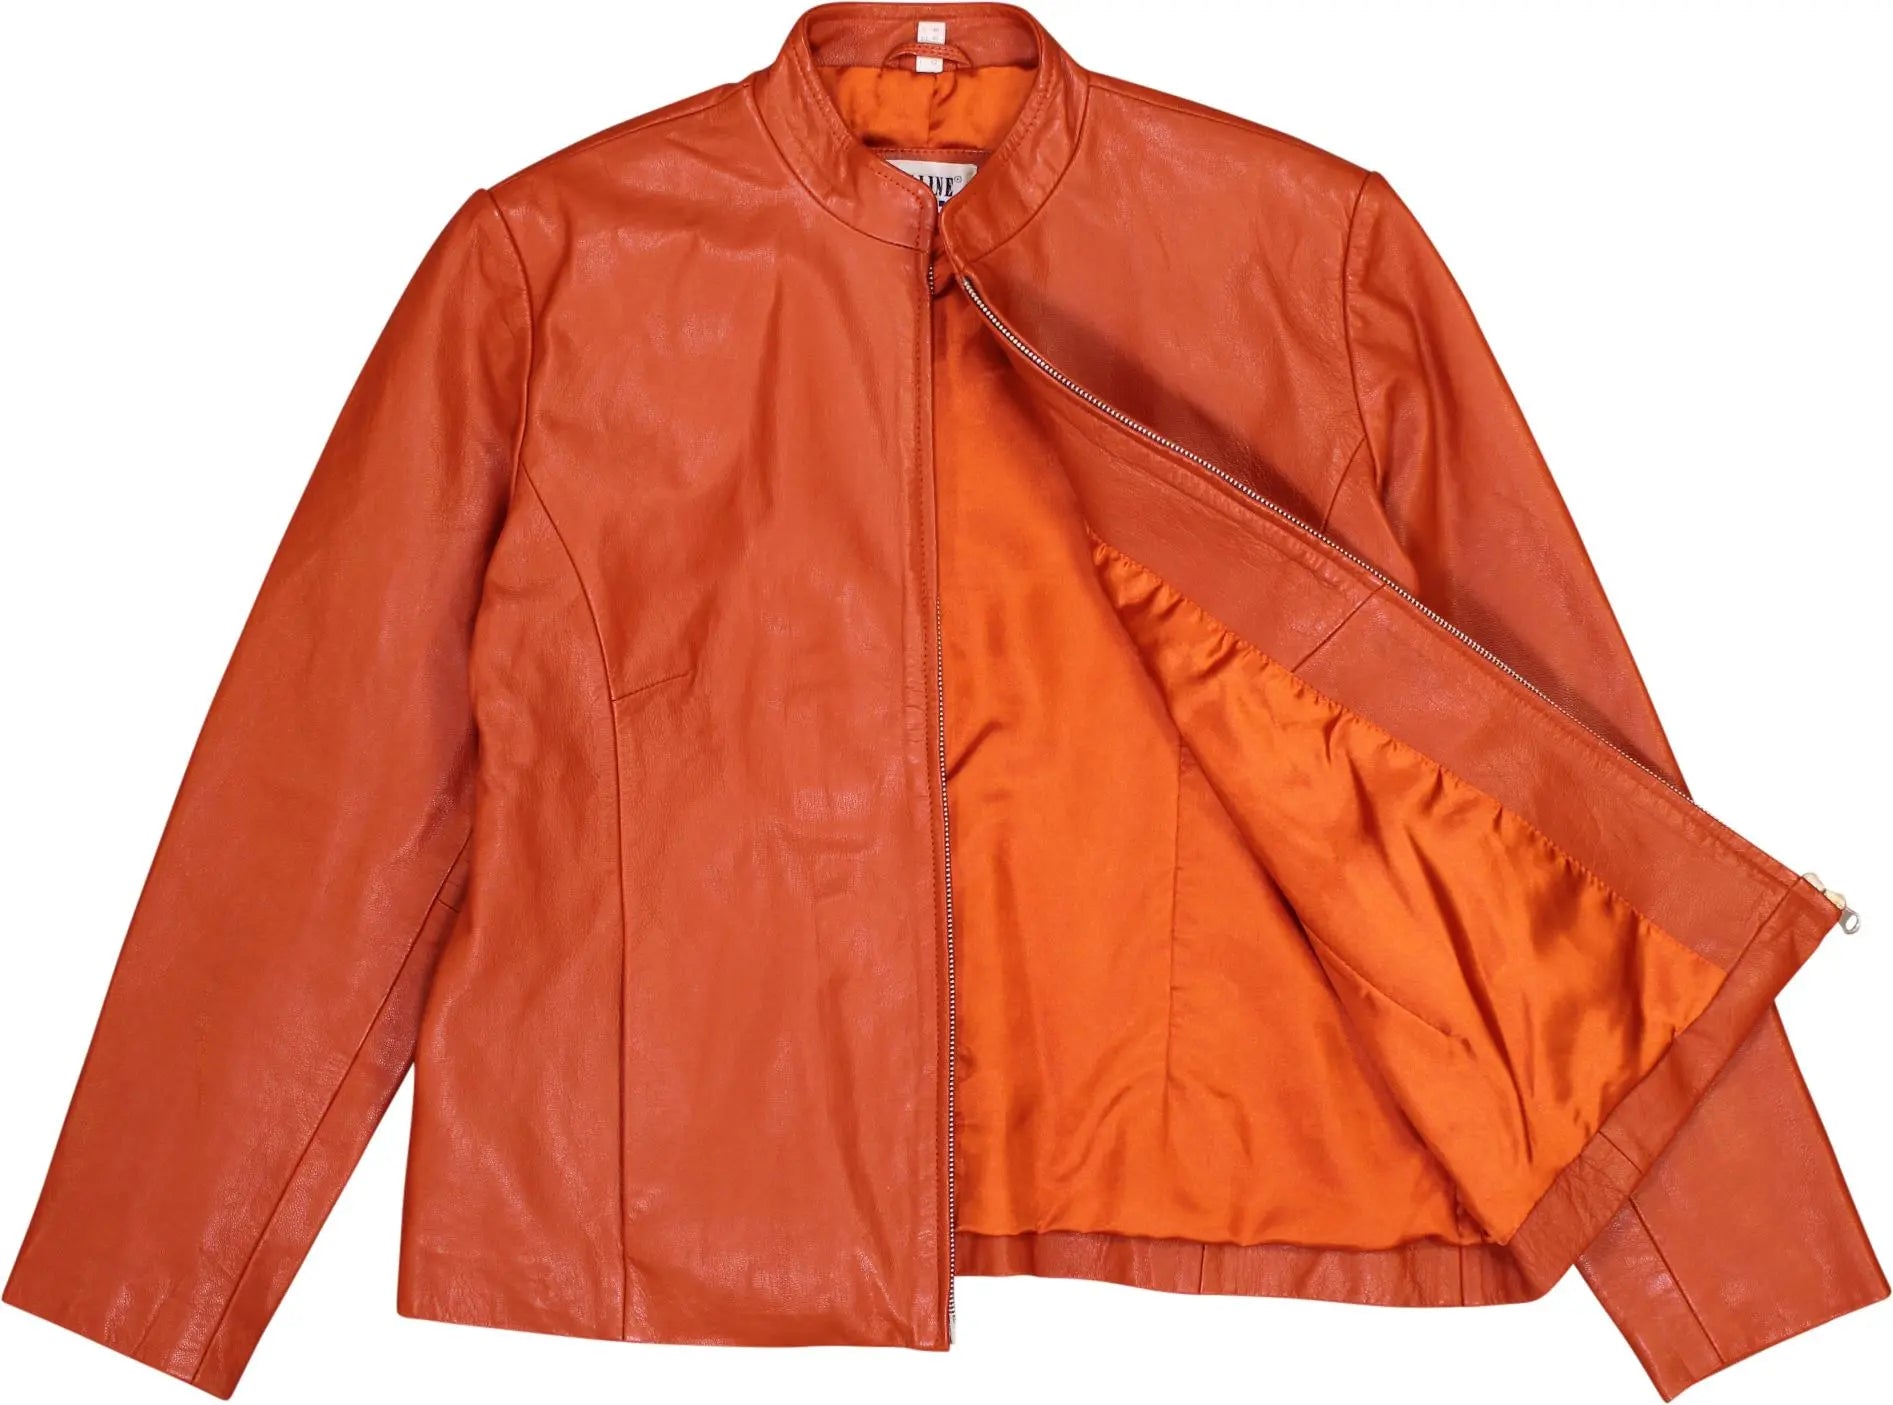 Helline - Orange Leather Jacket- ThriftTale.com - Vintage and second handclothing